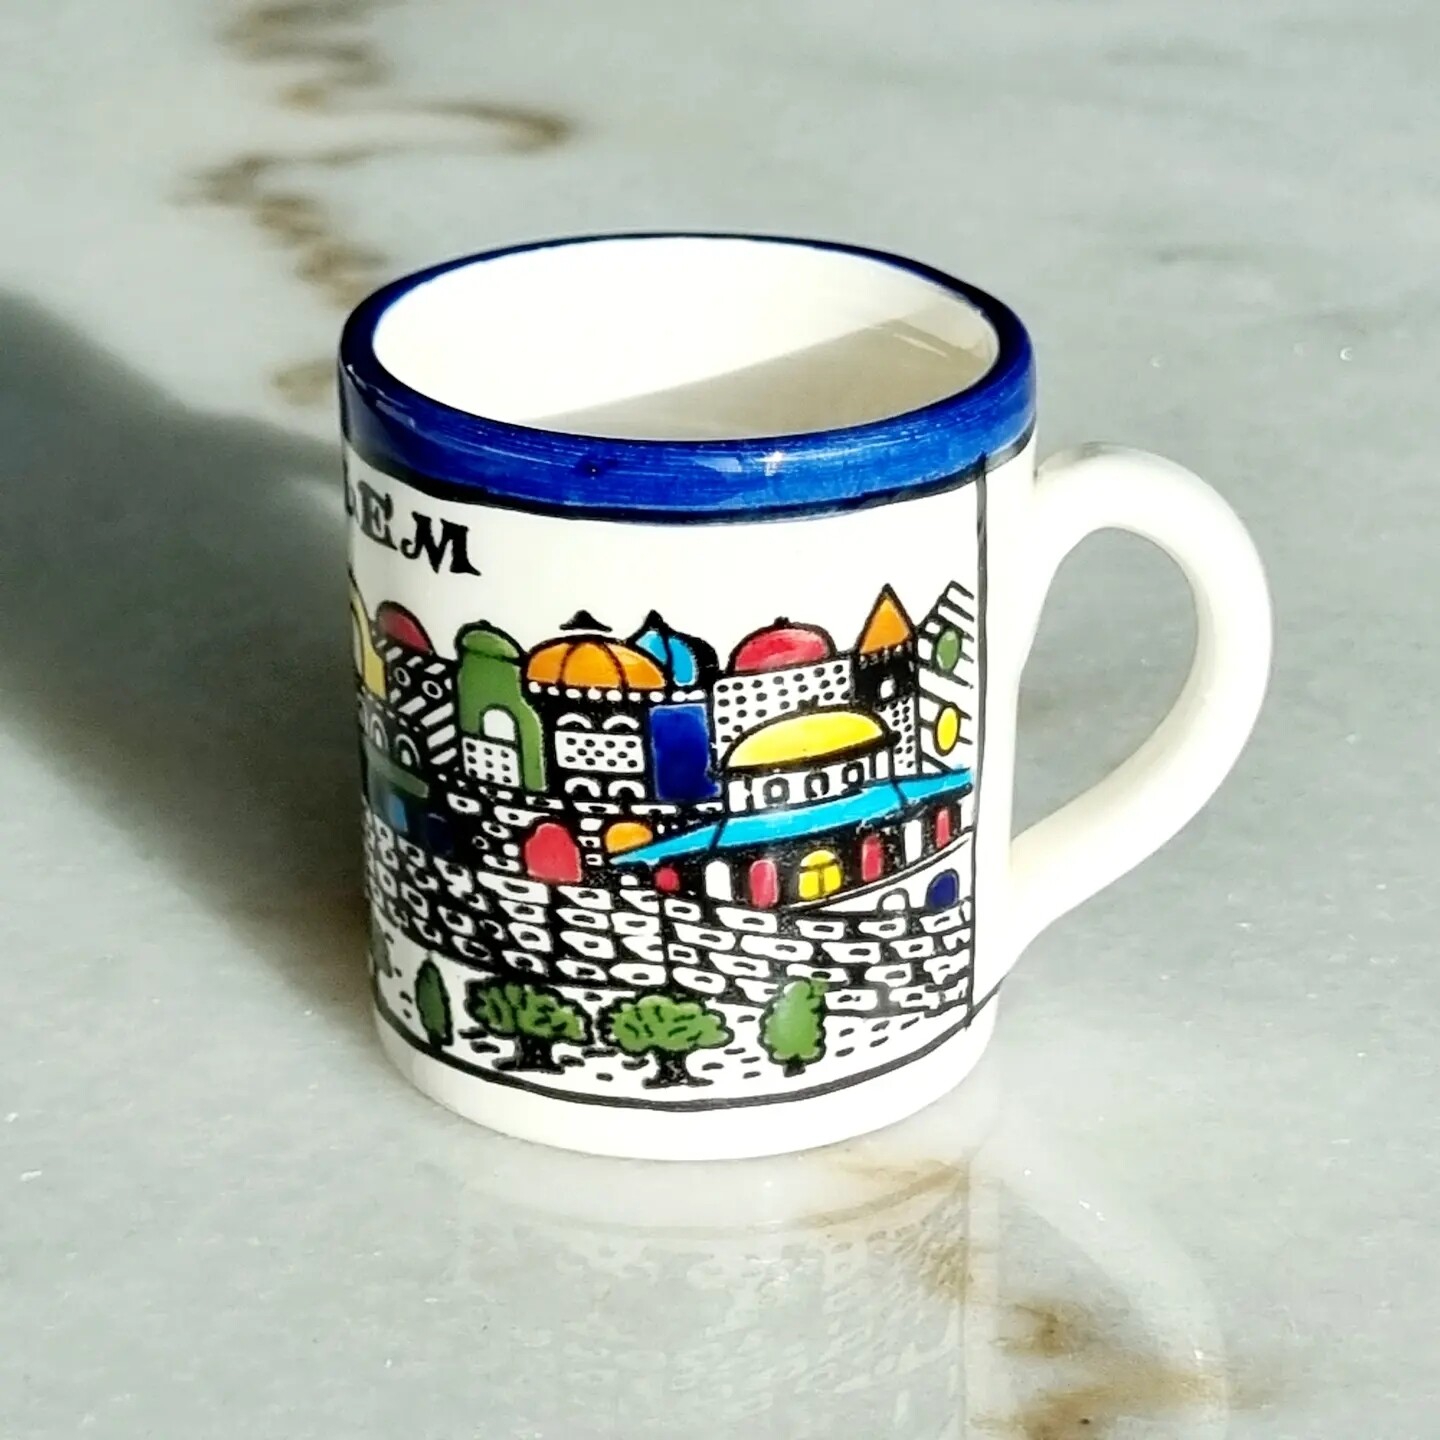 Jerusalem cup/mug small